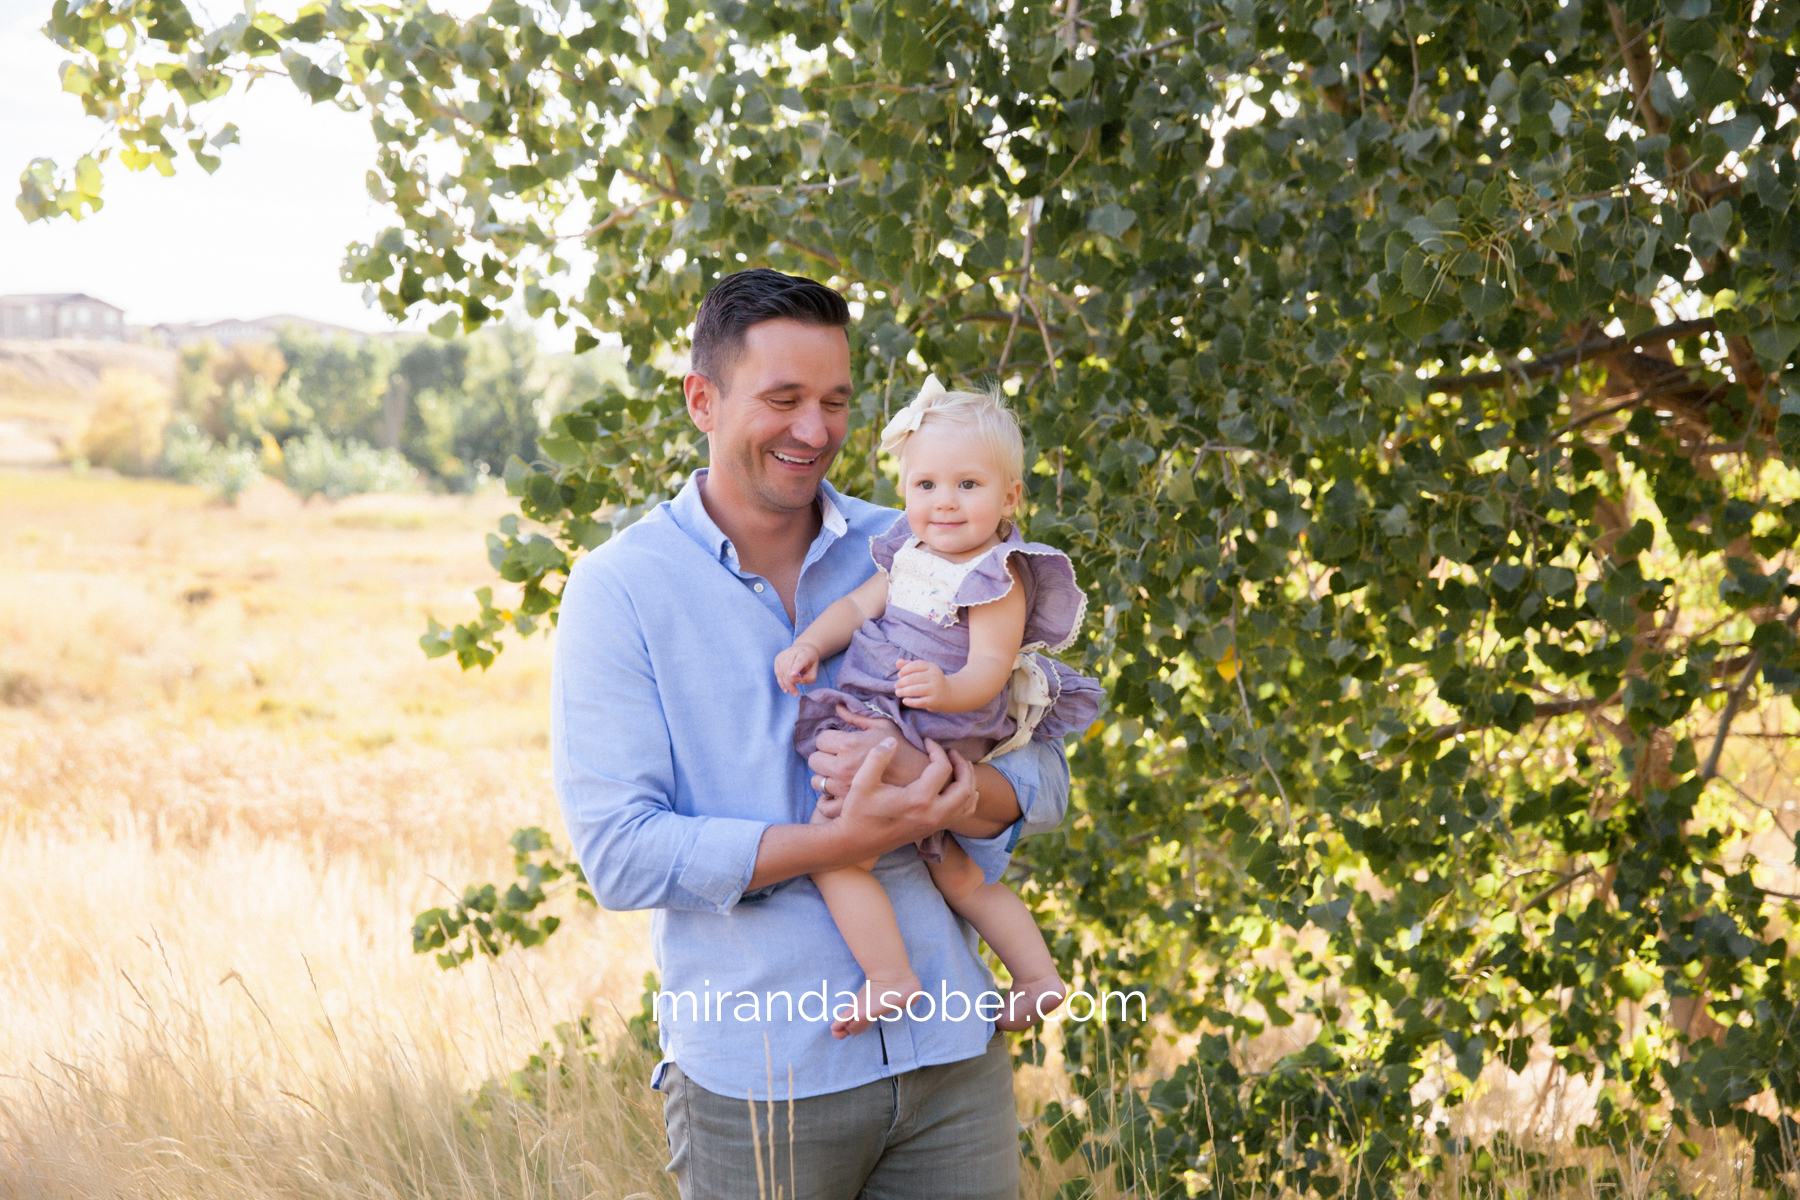 Best Denver Family Photographers, Miranda L. Sober Photography